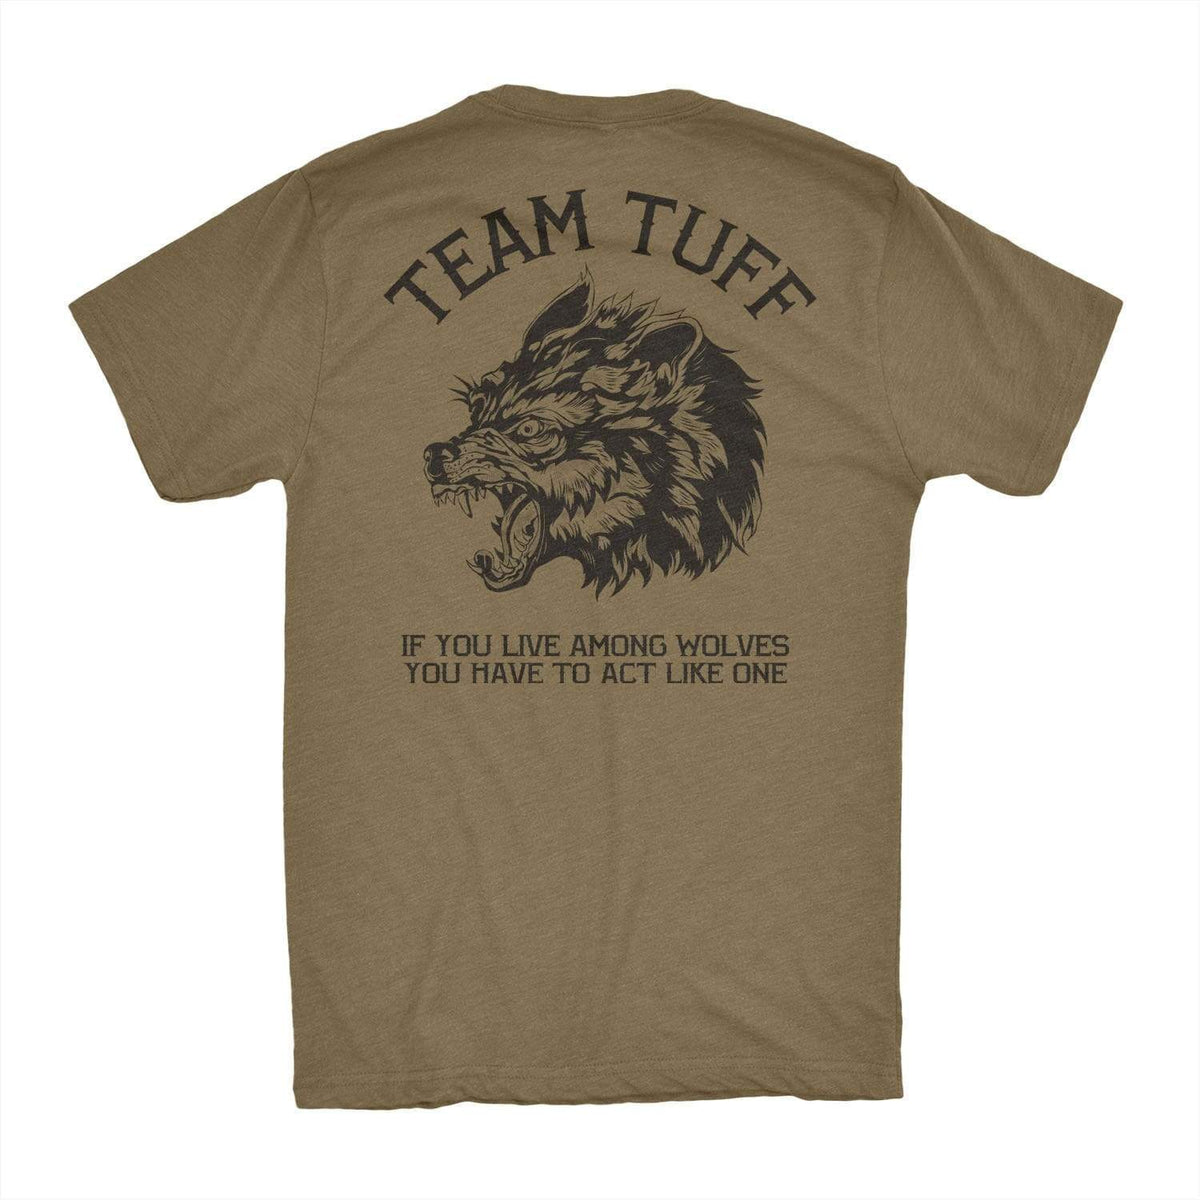 Team TUFF Wolves Club Tee S / Military Green TuffWraps.com